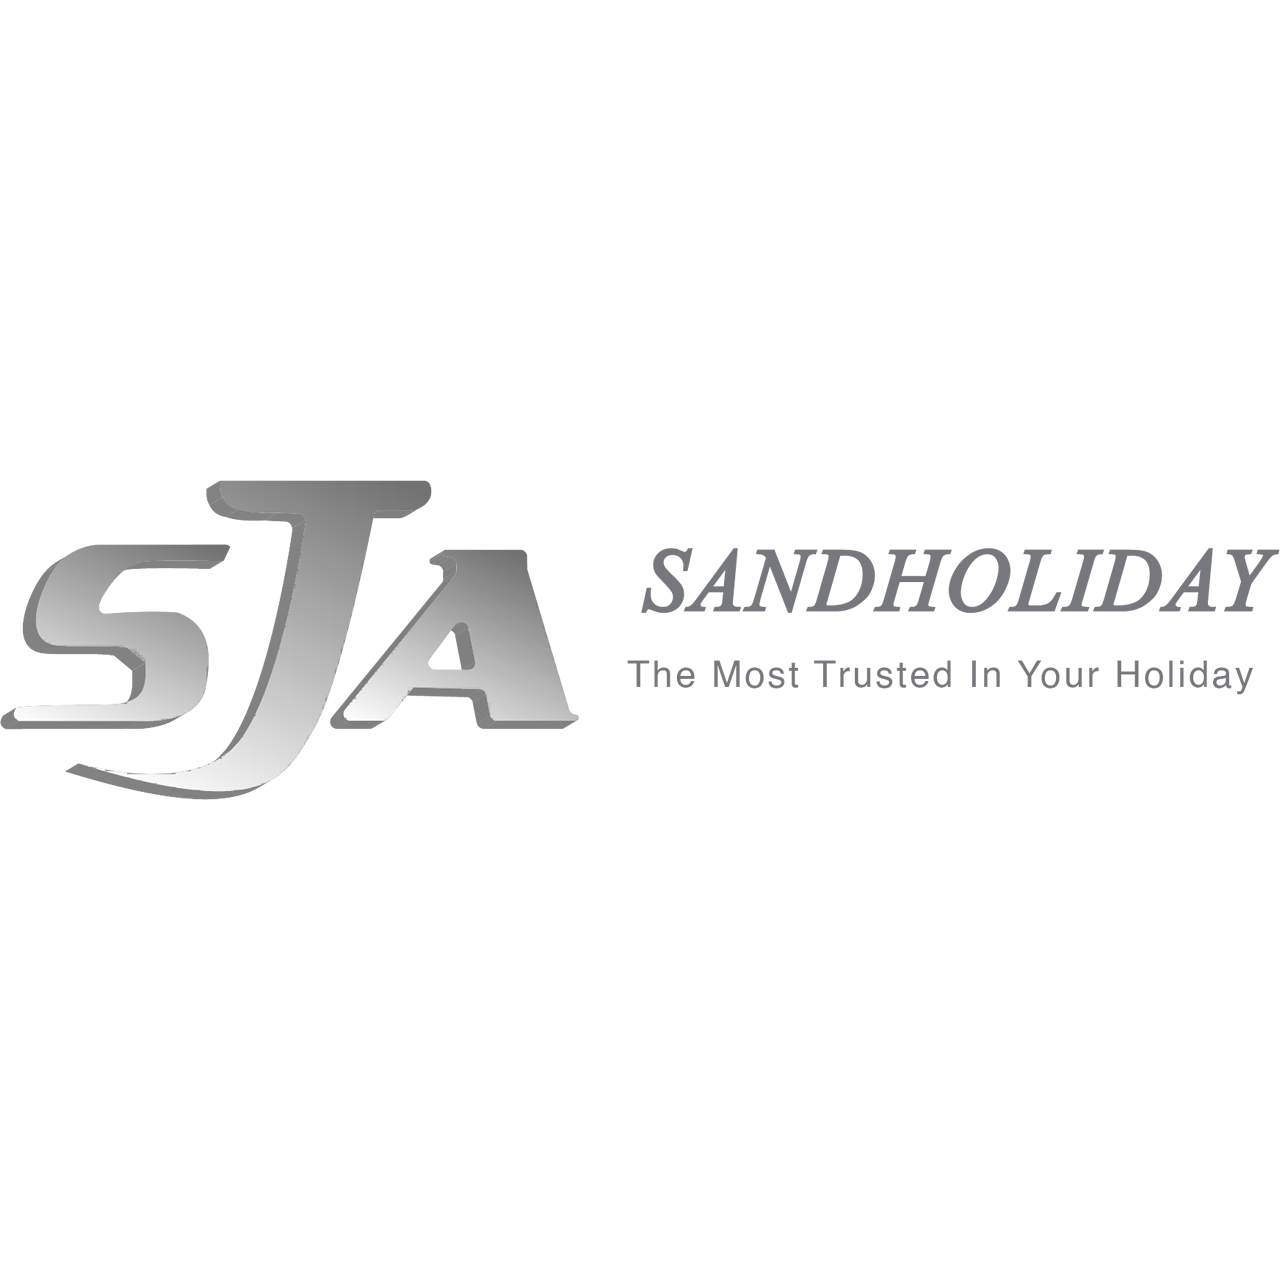 Sandholiday